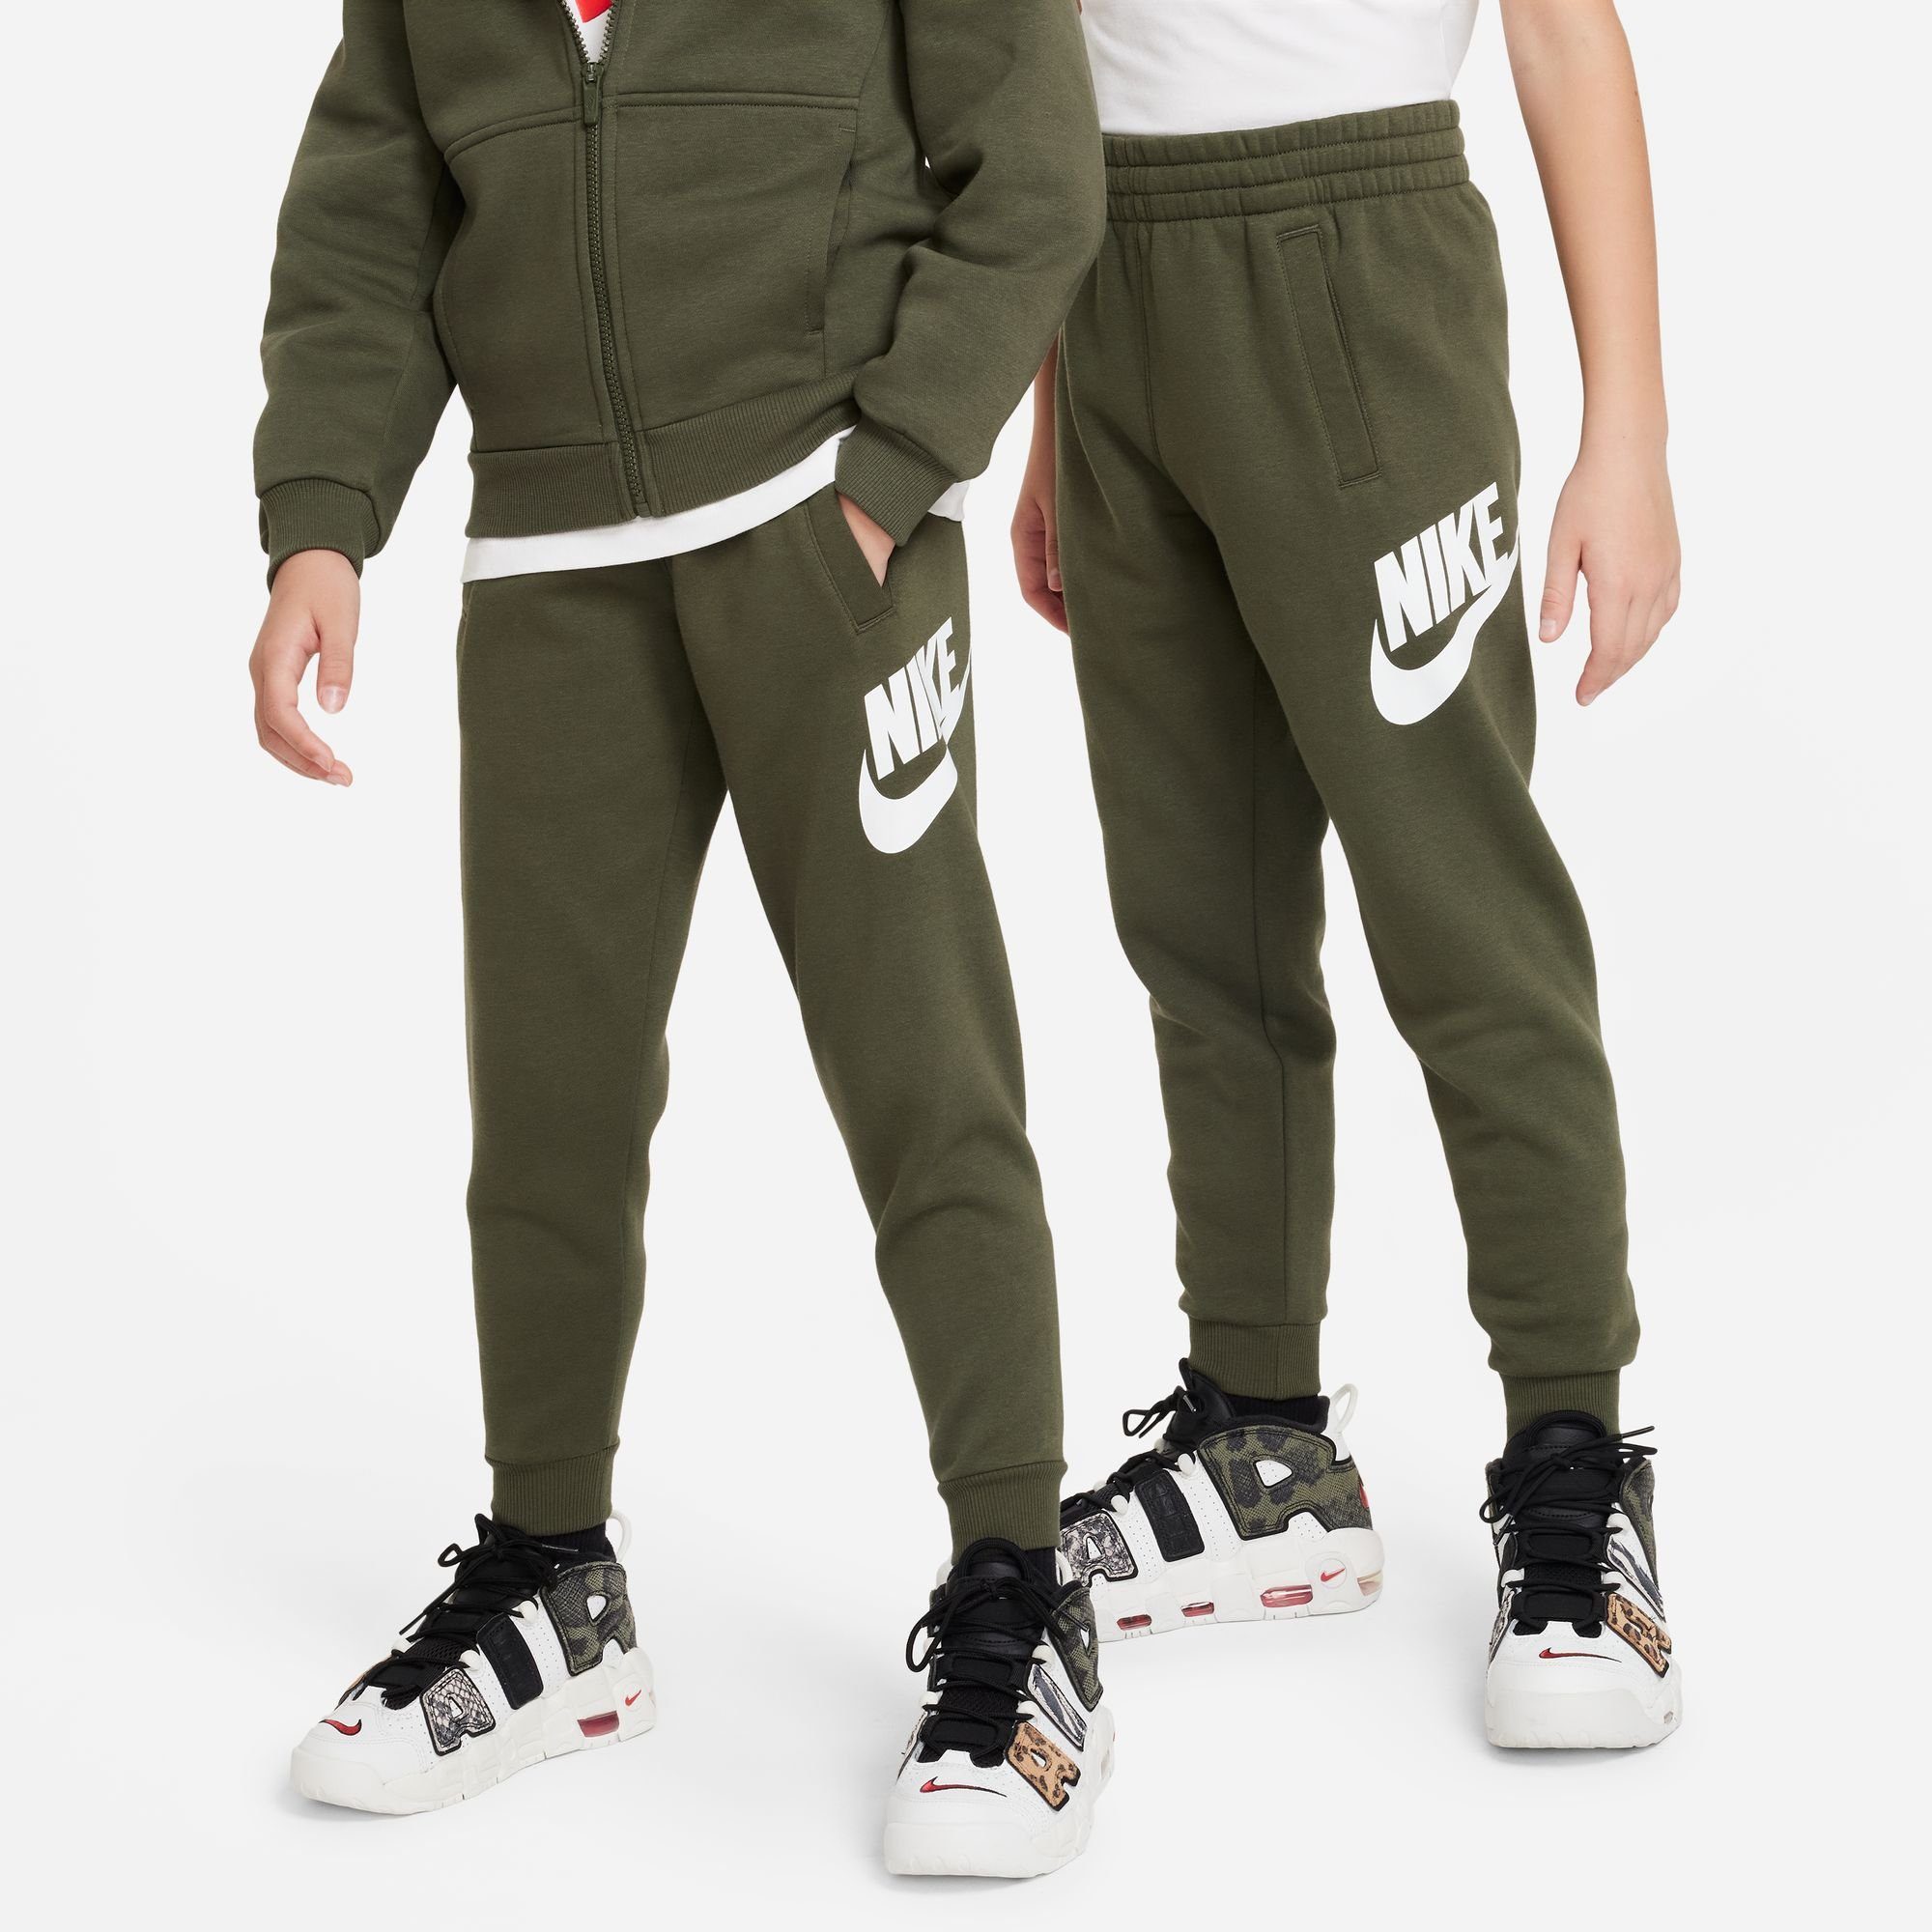 KHAKI/WHITE Nike KIDS' CARGO Jogginghose JOGGER FLEECE PANTS CLUB Sportswear BIG